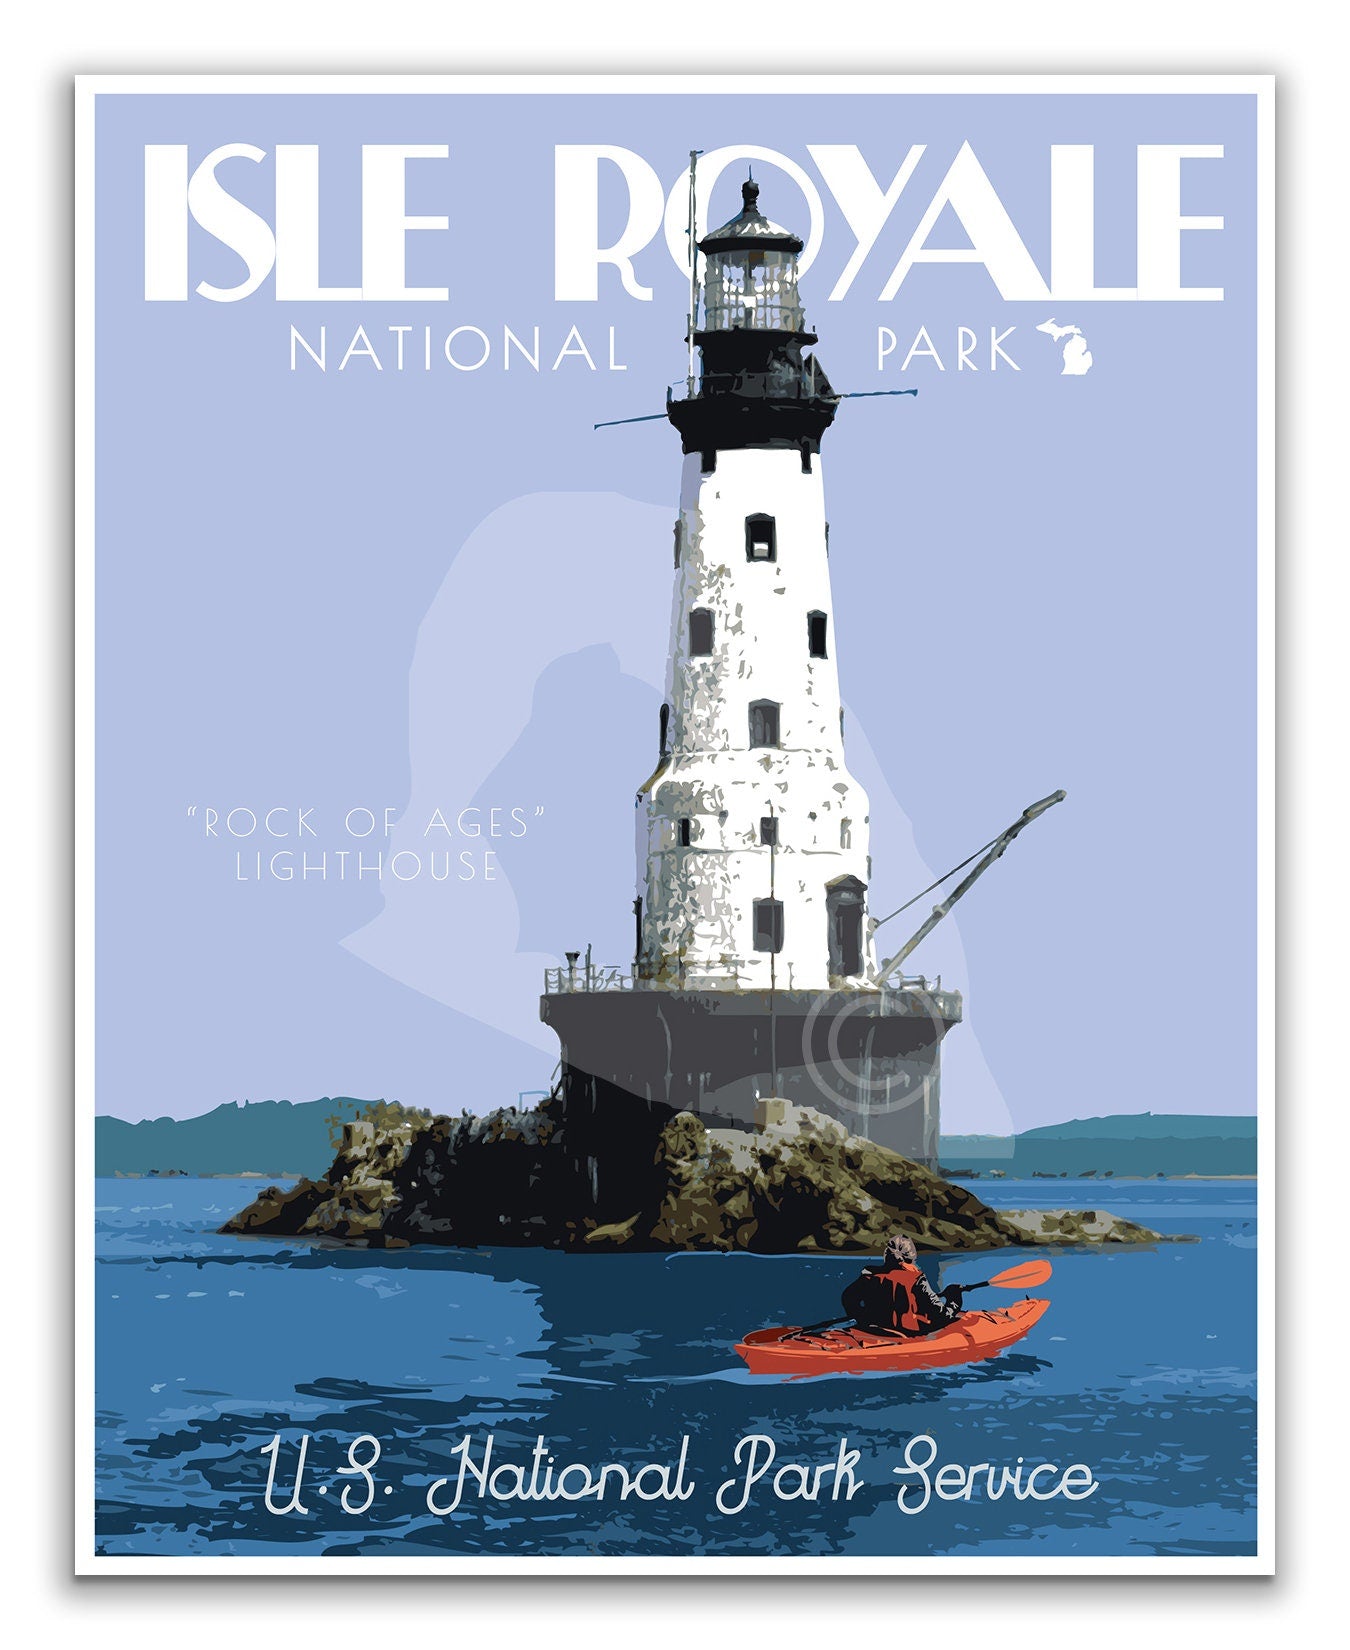 Isle Royale National Park Print, Isle Royale Lighthouse Print, Lake Superior Poster, Vintage Style Travel Art